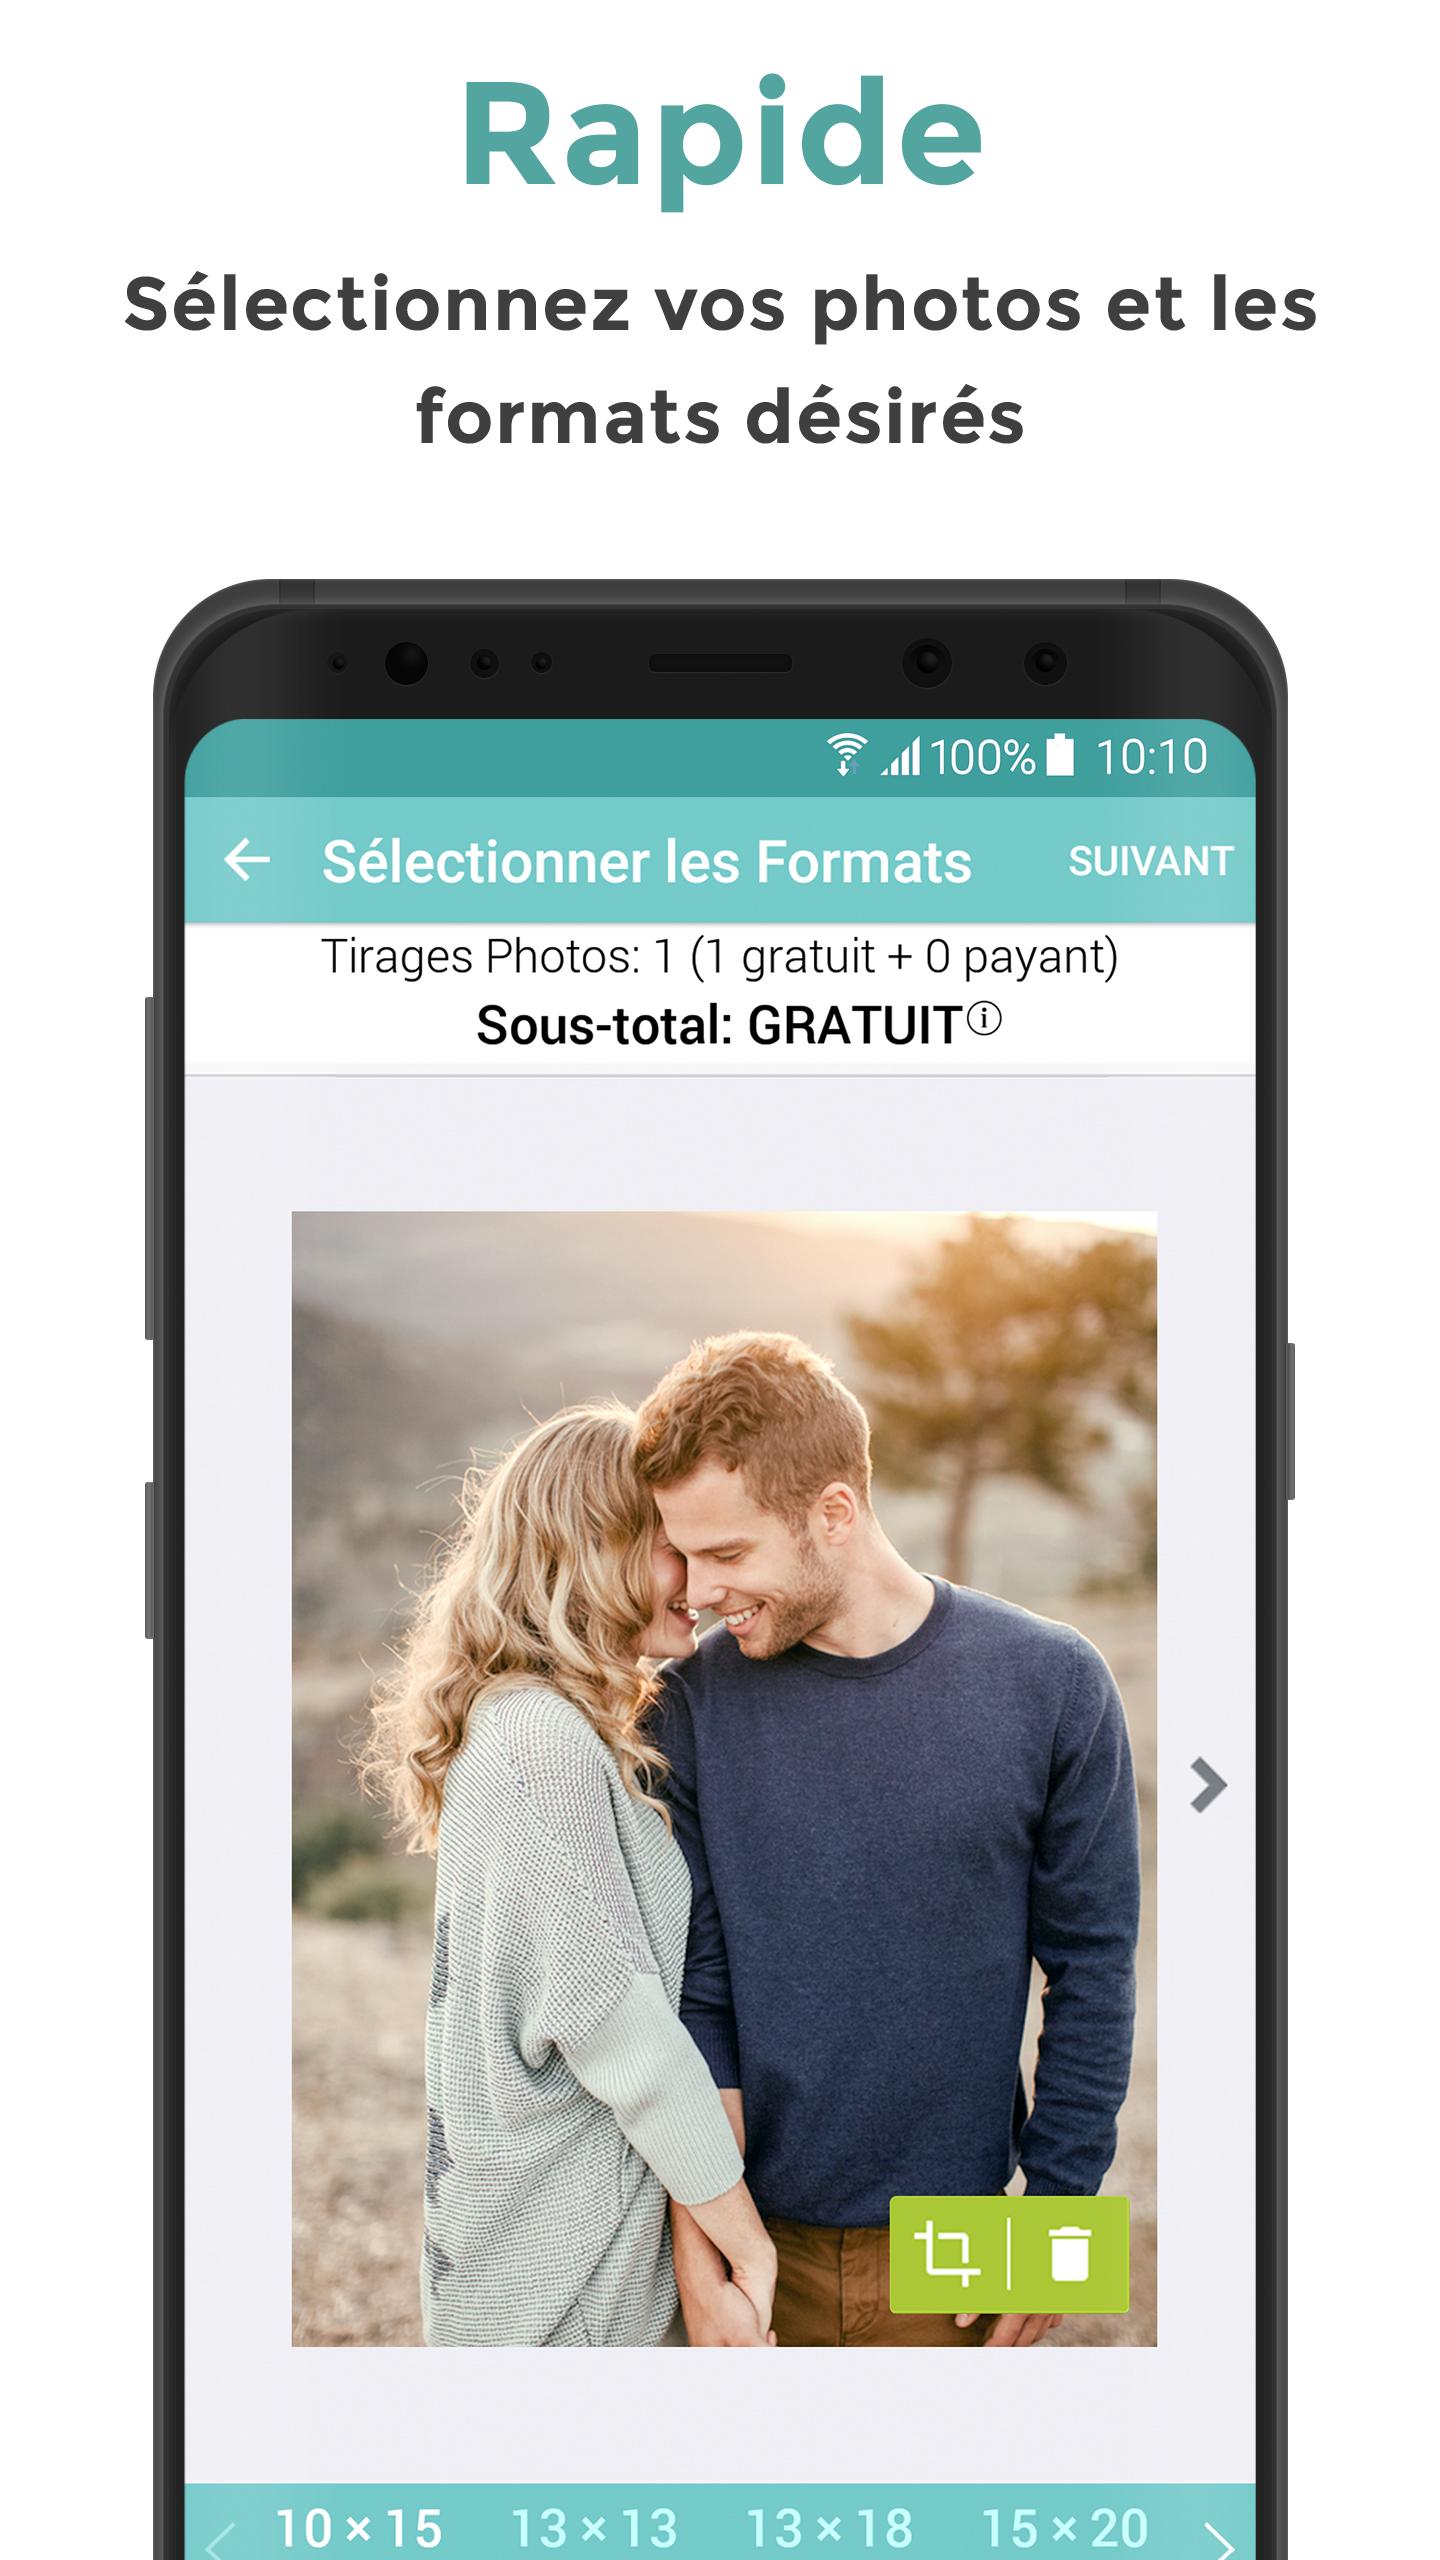 Android application FreePrints screenshort